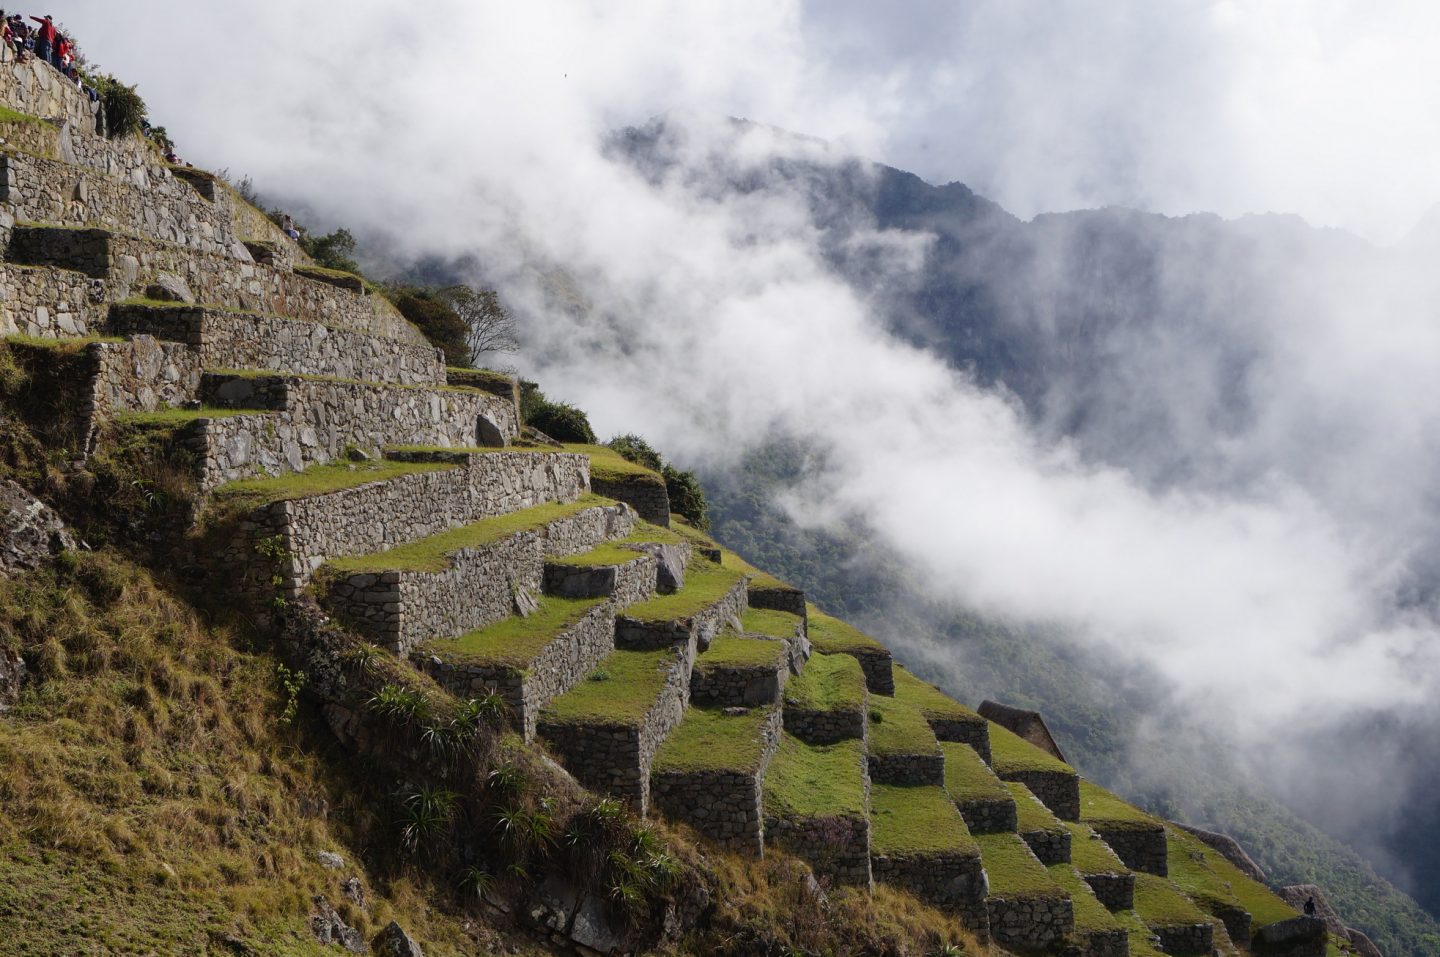 The ruins of Machu Picchu in Peru on a foggy day